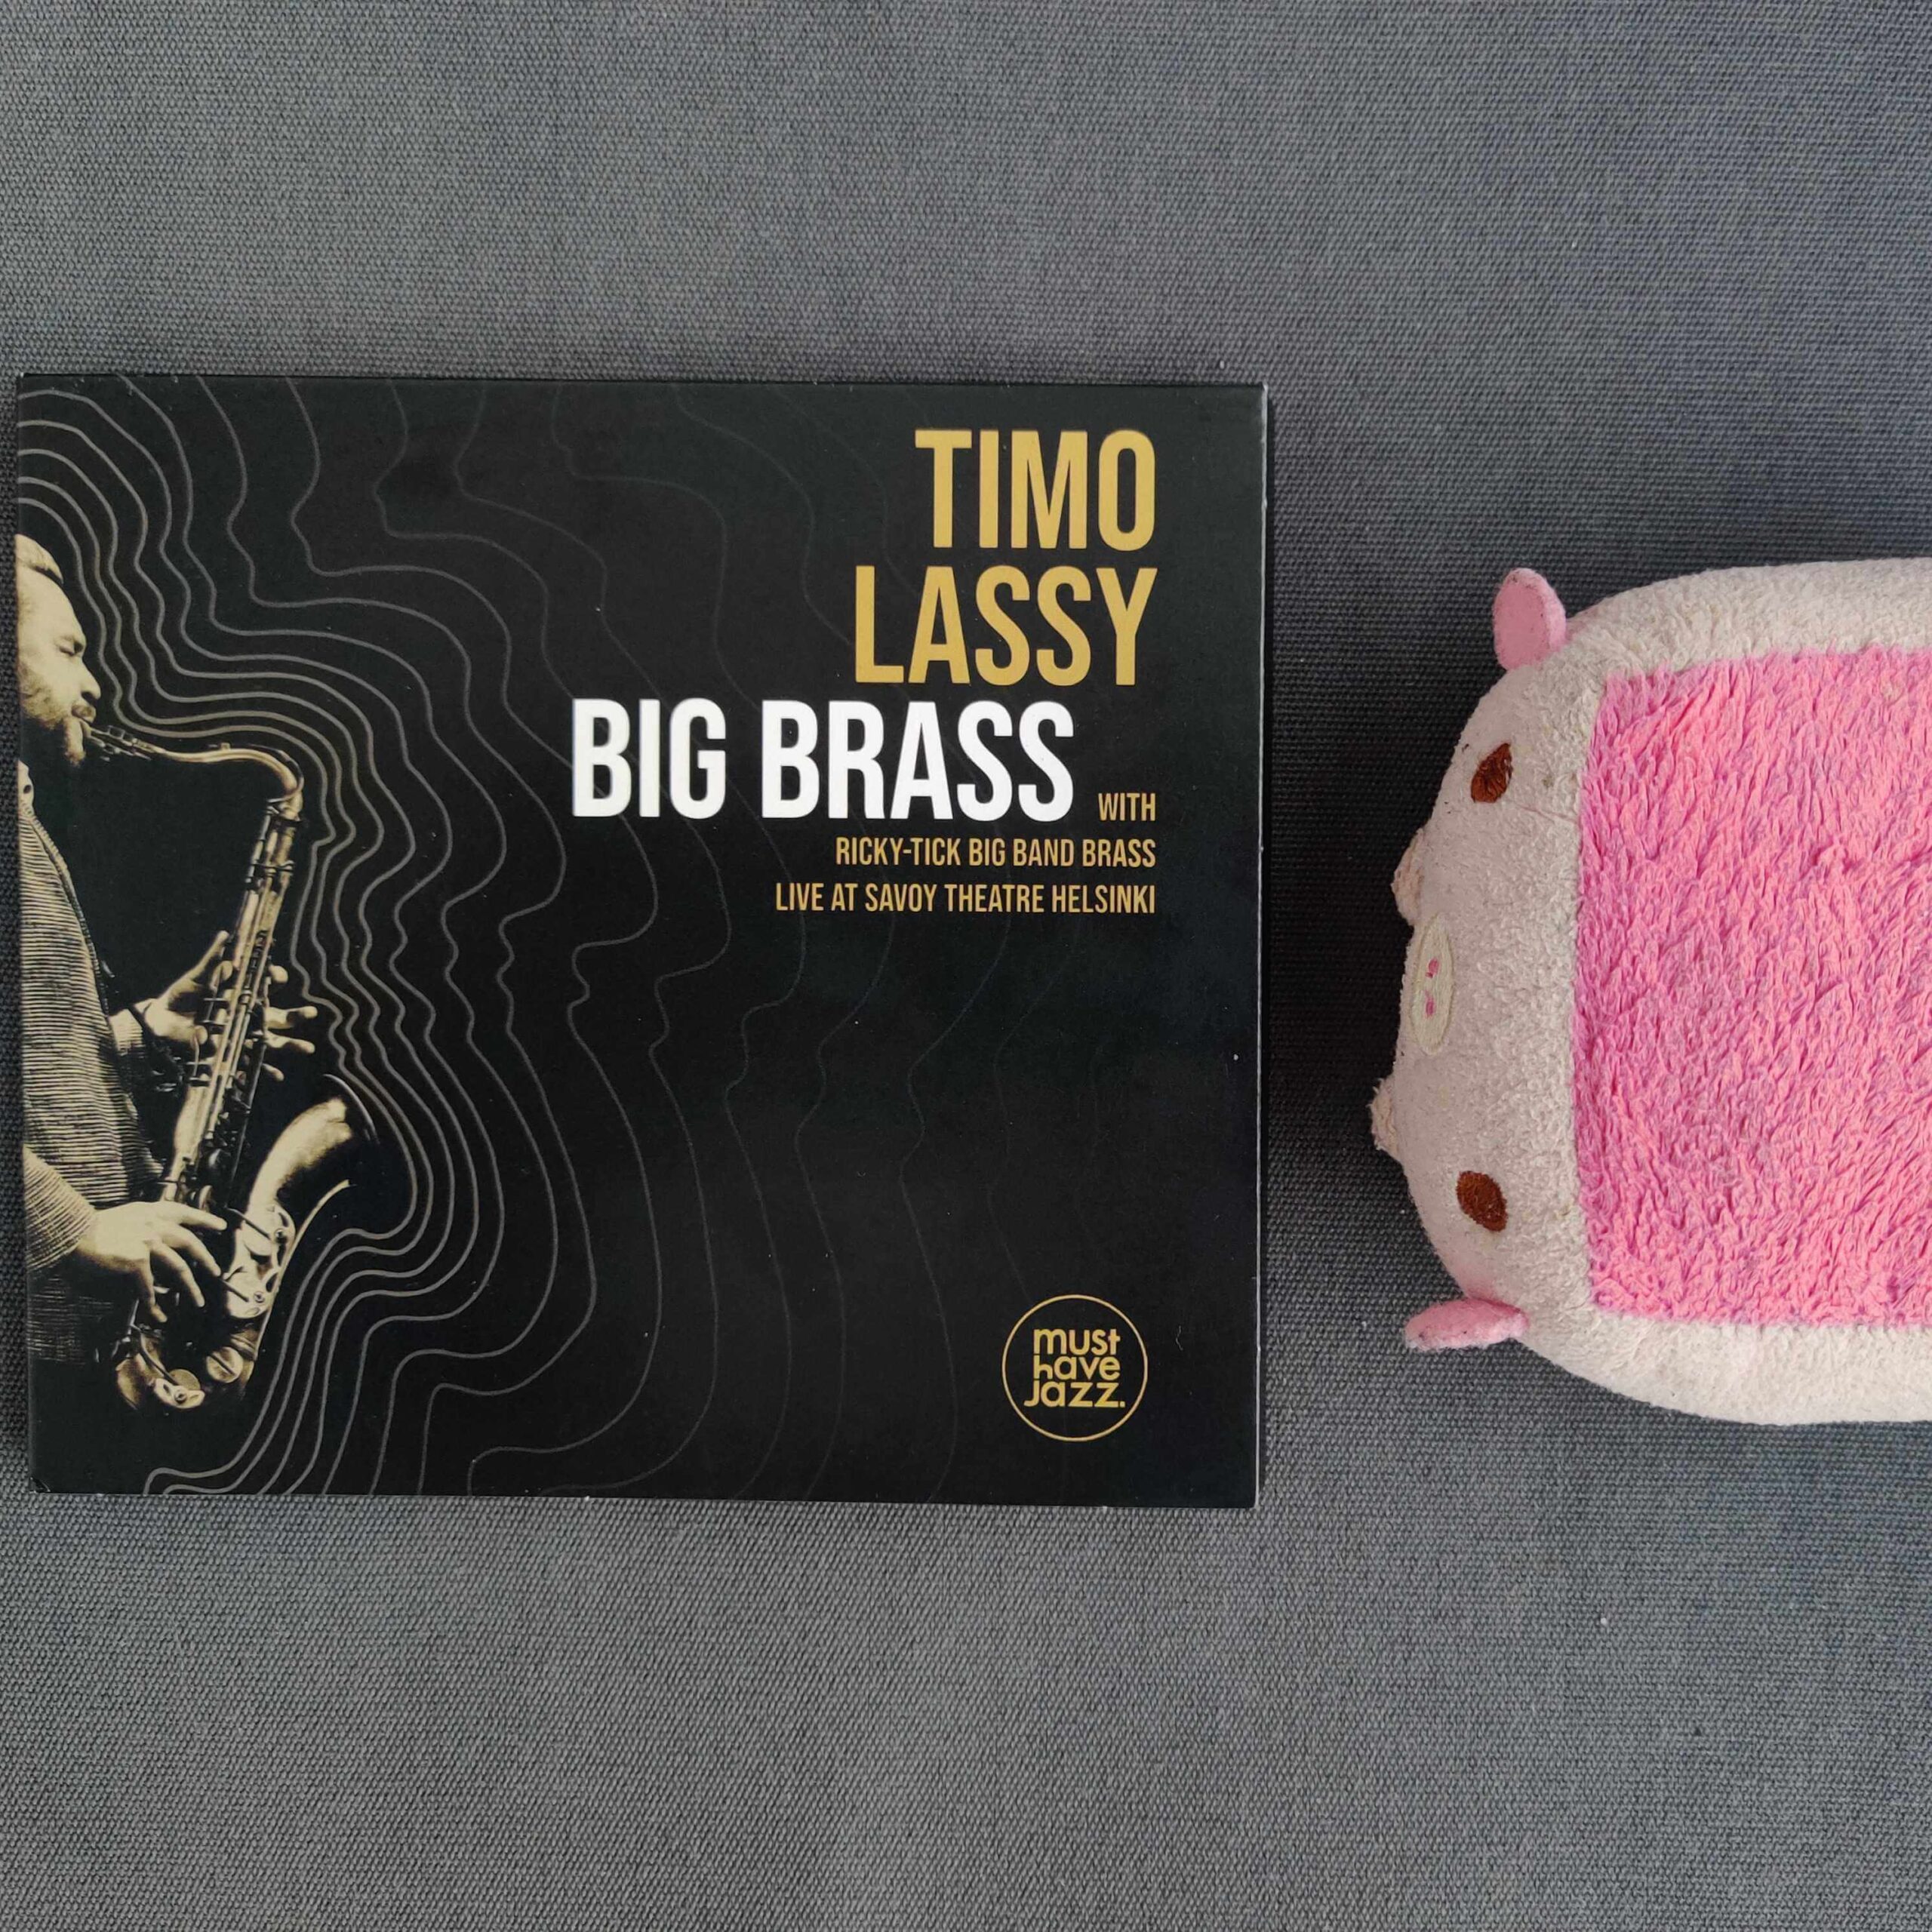 Timo Lassy with Ricky-Tick Big Band Brass – Big Brass